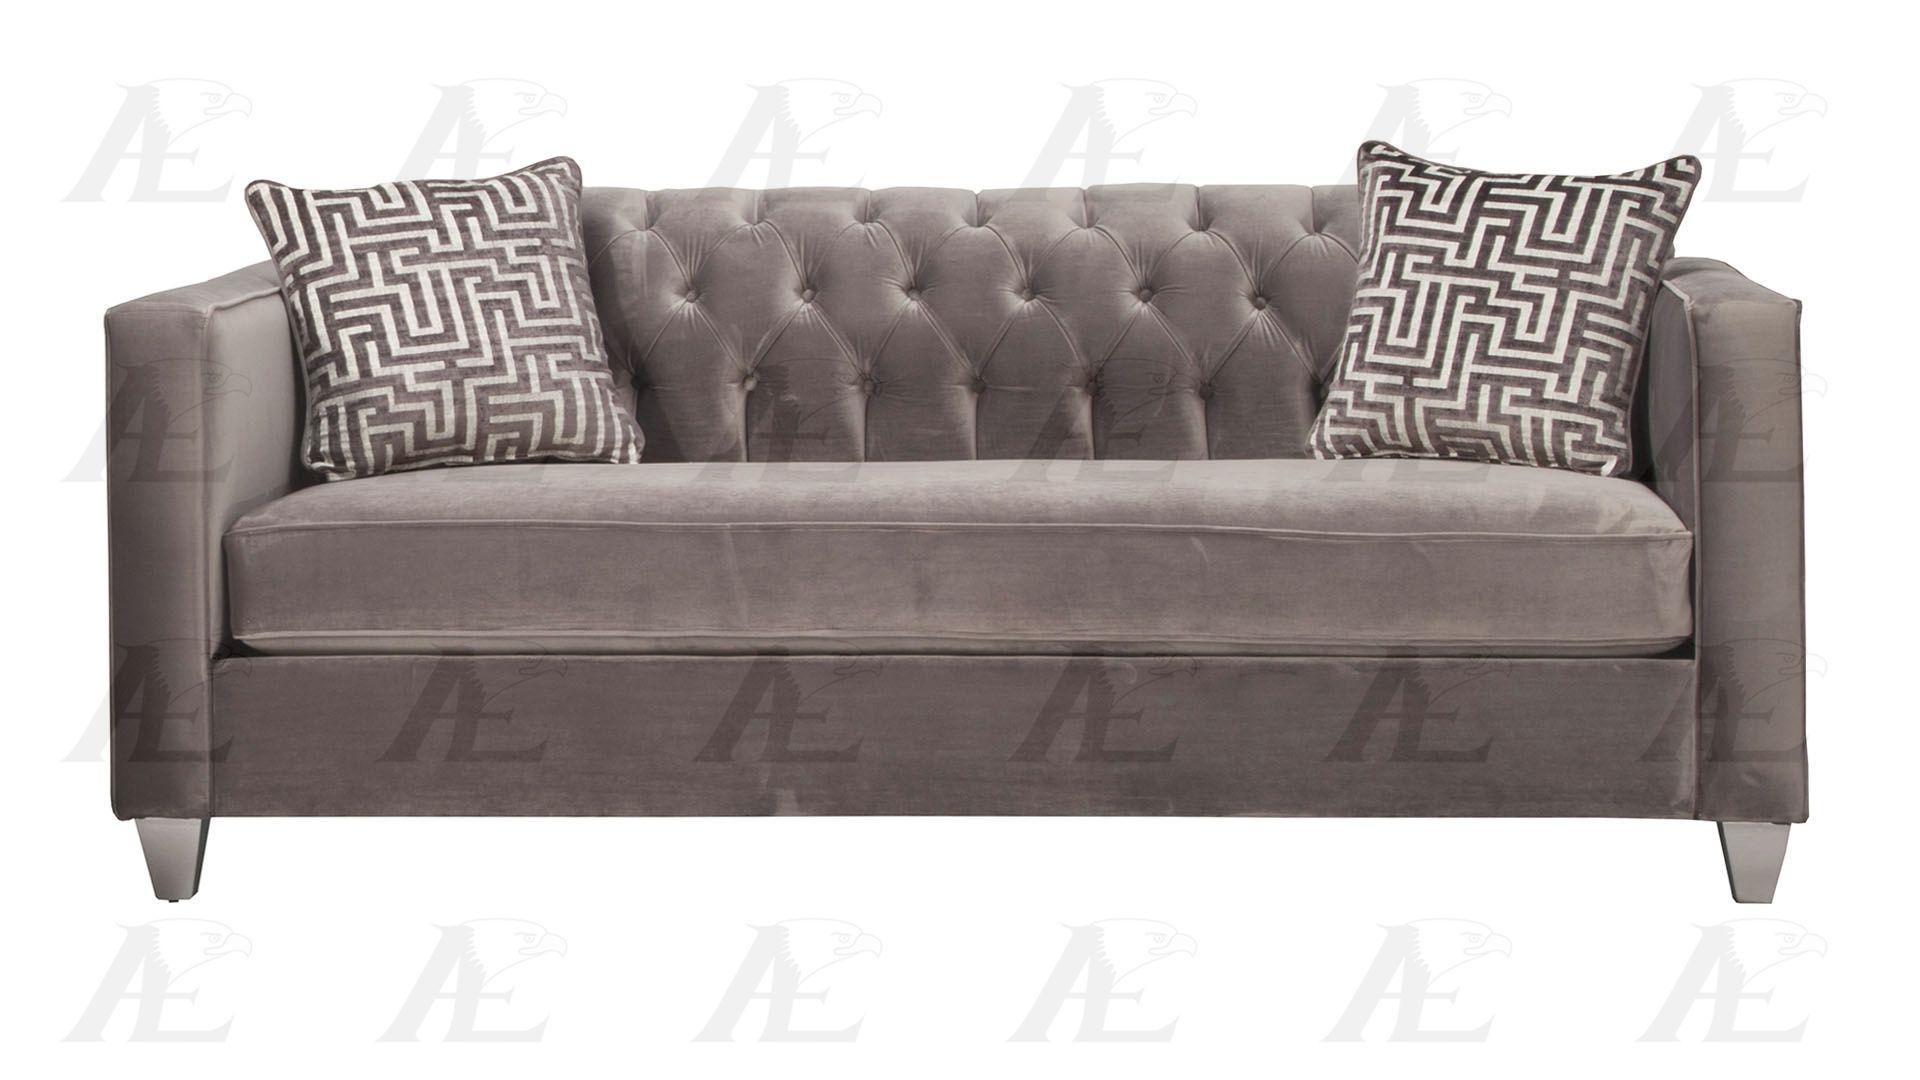 

    
American Eagle Furniture AE2602-GR Gray Tufted Sofa Fabric Contemporary
